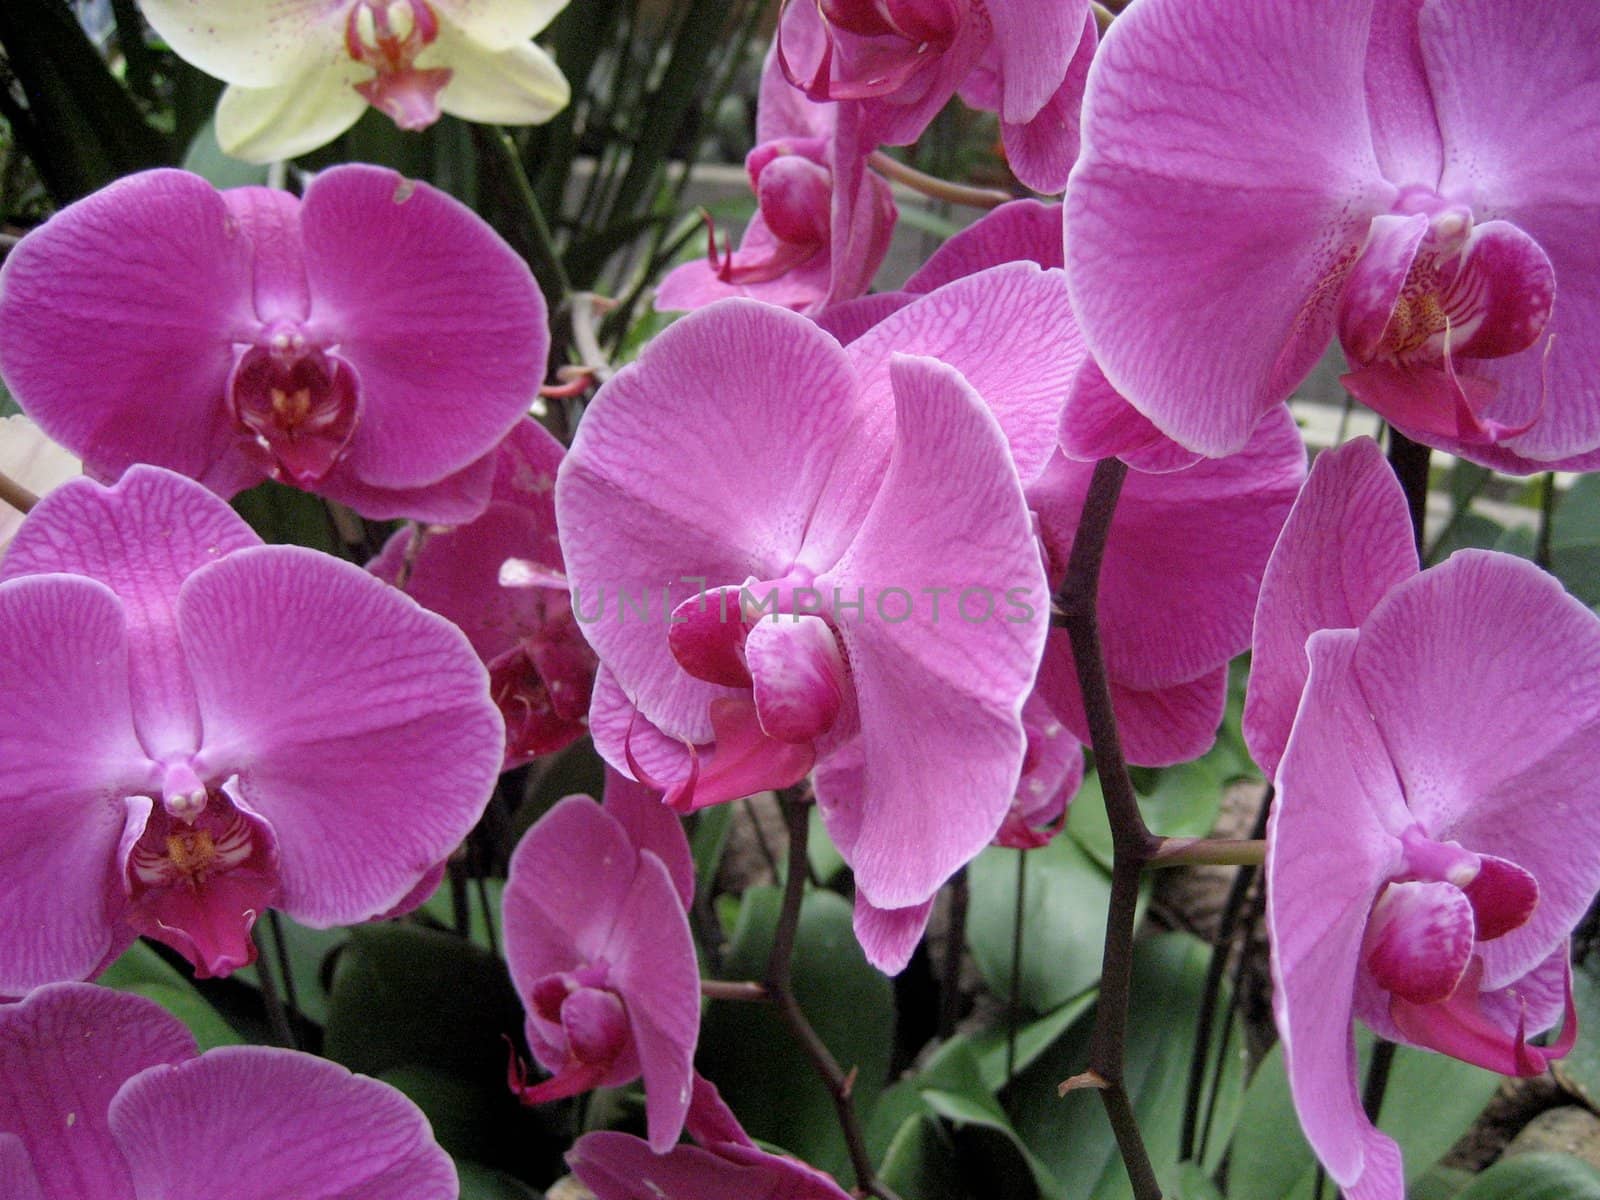 Garden of purple orchids
